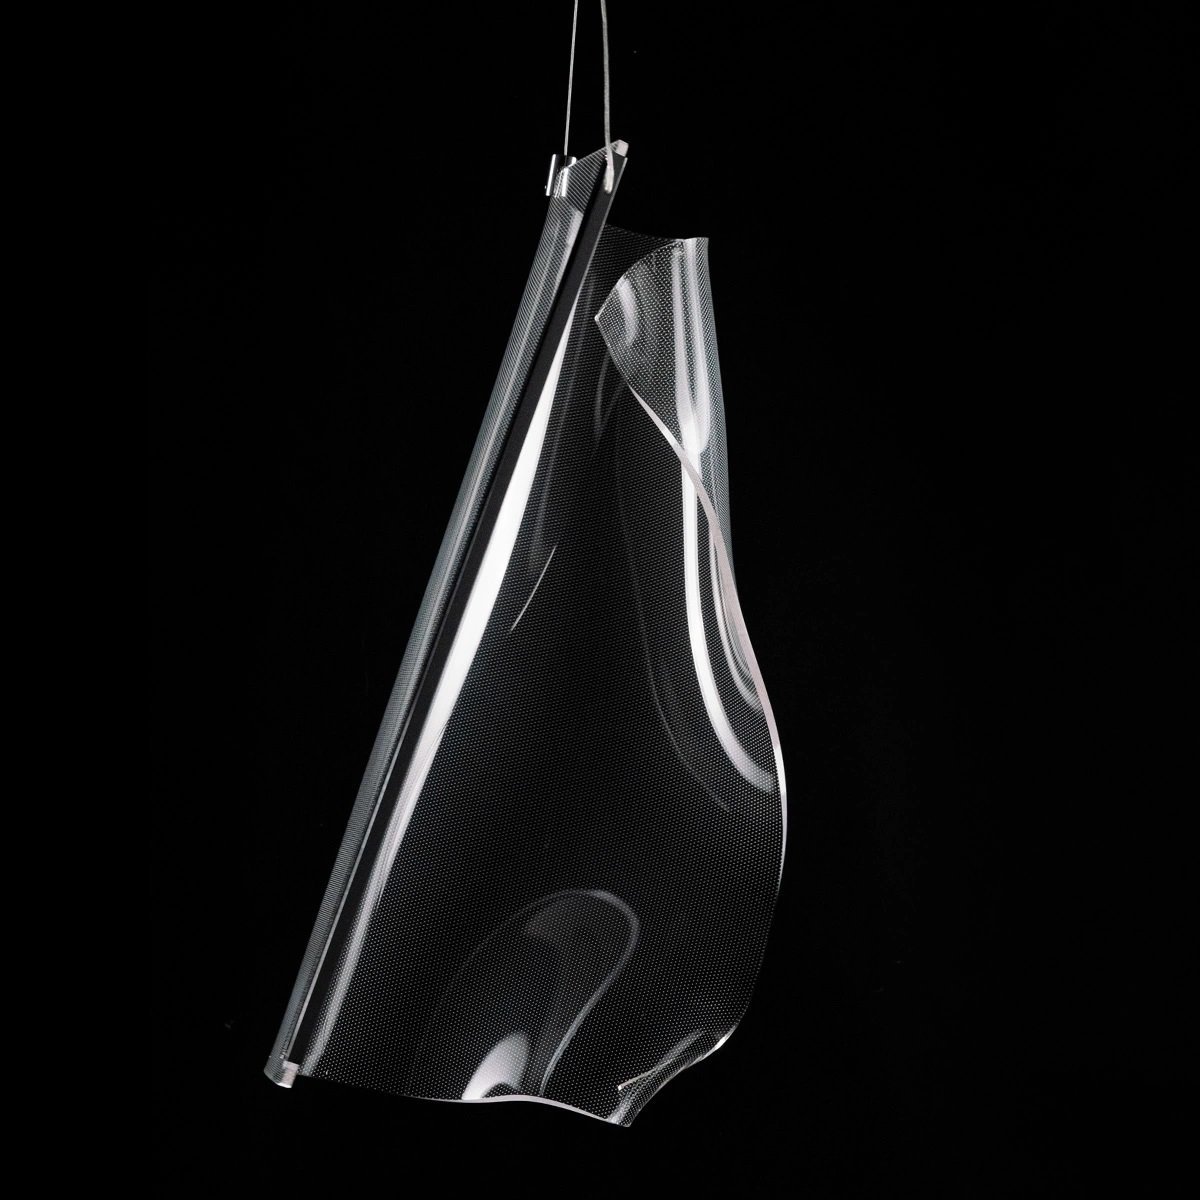 Altavola Design Altavola lampa wisząca LED Cortina No.1 10W 600lm 3000K chrom transparentna 10804